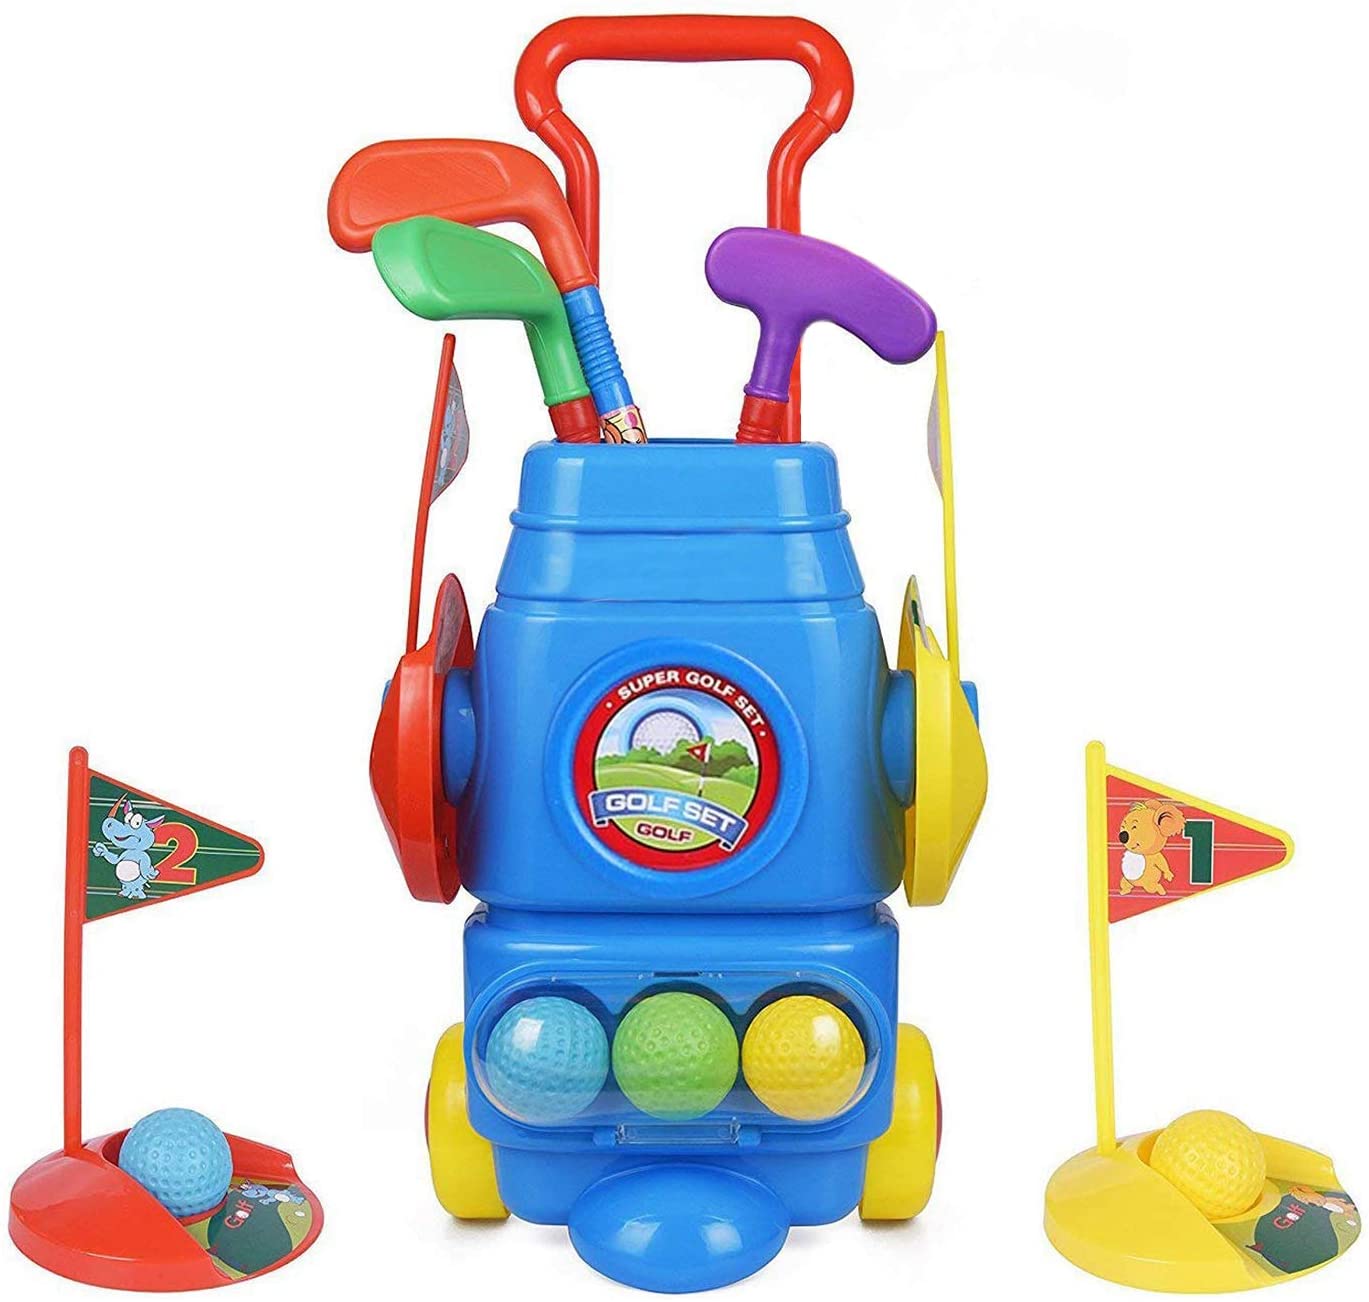 ToyVelt Kids Golf Club Set – Golf CartWith Wheels, 3 Colorful Golf Sticks, 3 Balls & 2 Practice Holes